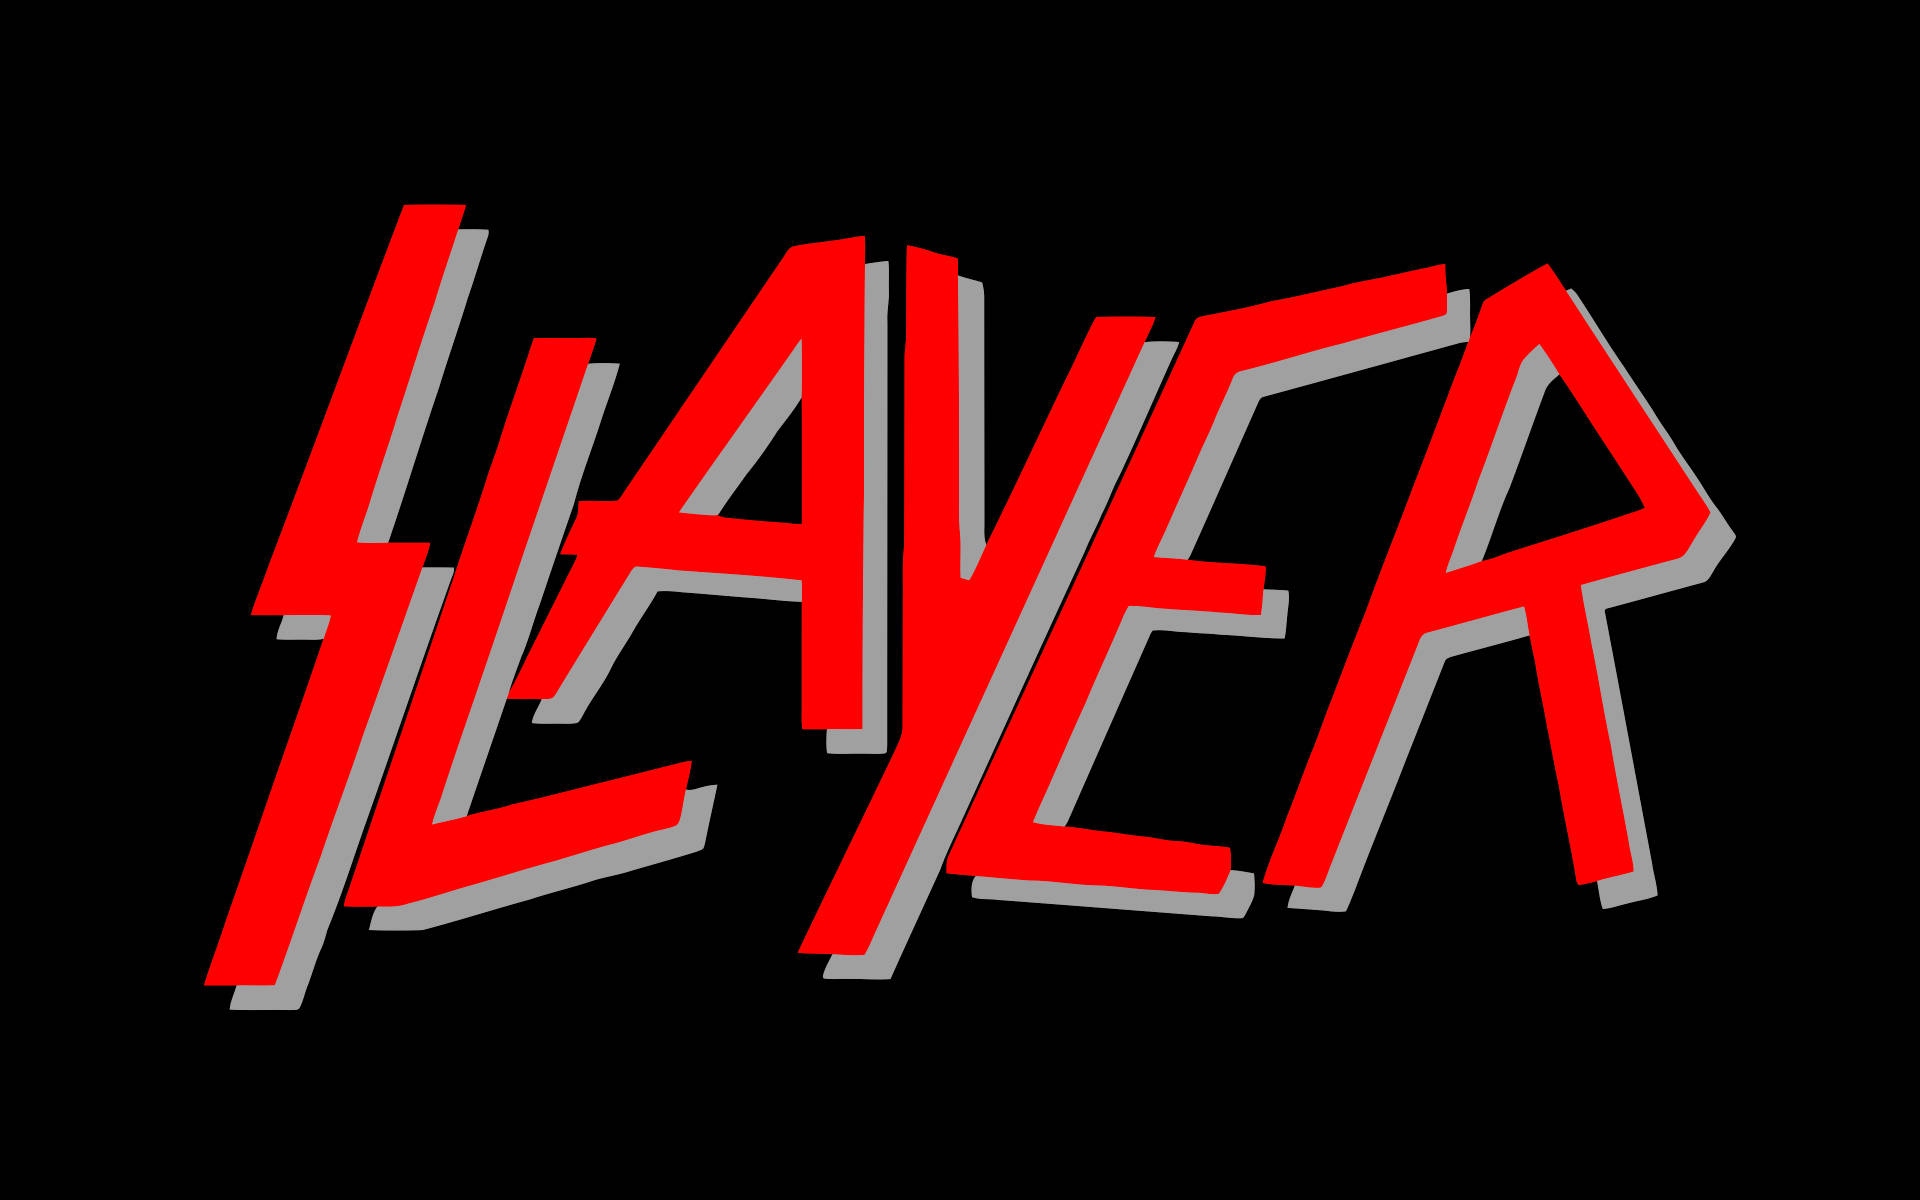 Red Neon Slayer Logo Background